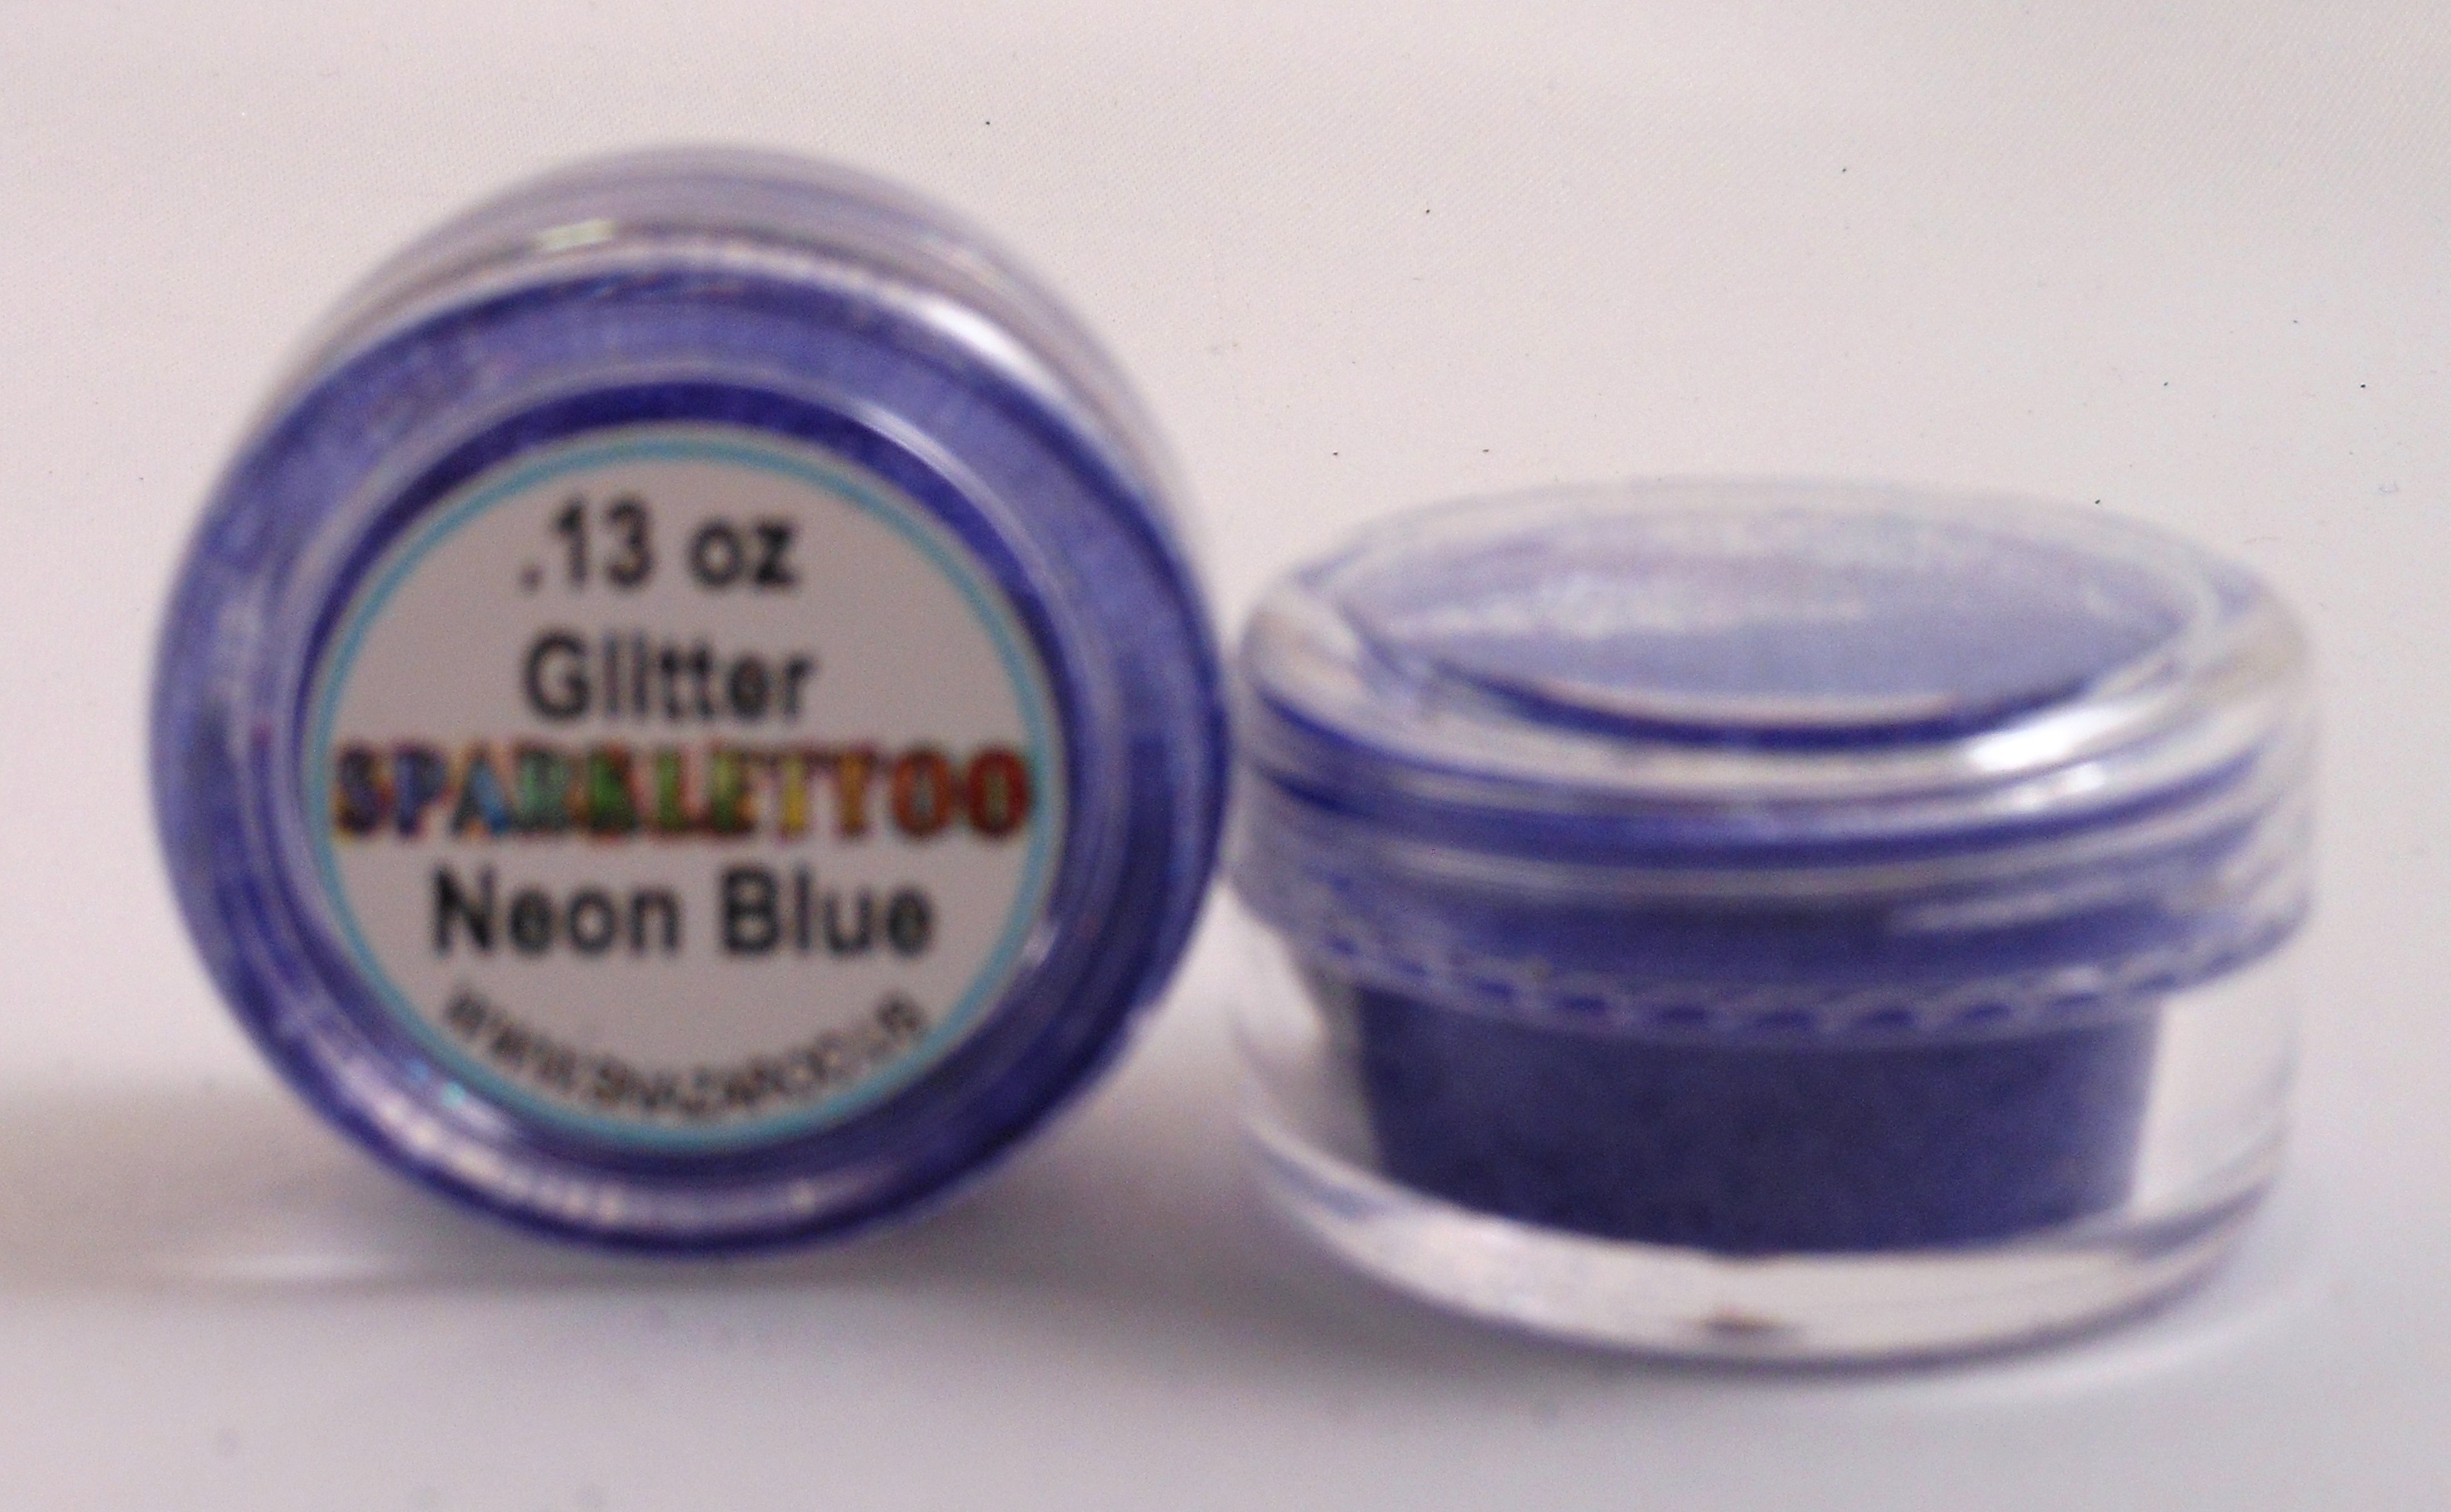 Glitter Neon Blue .13 oz.  